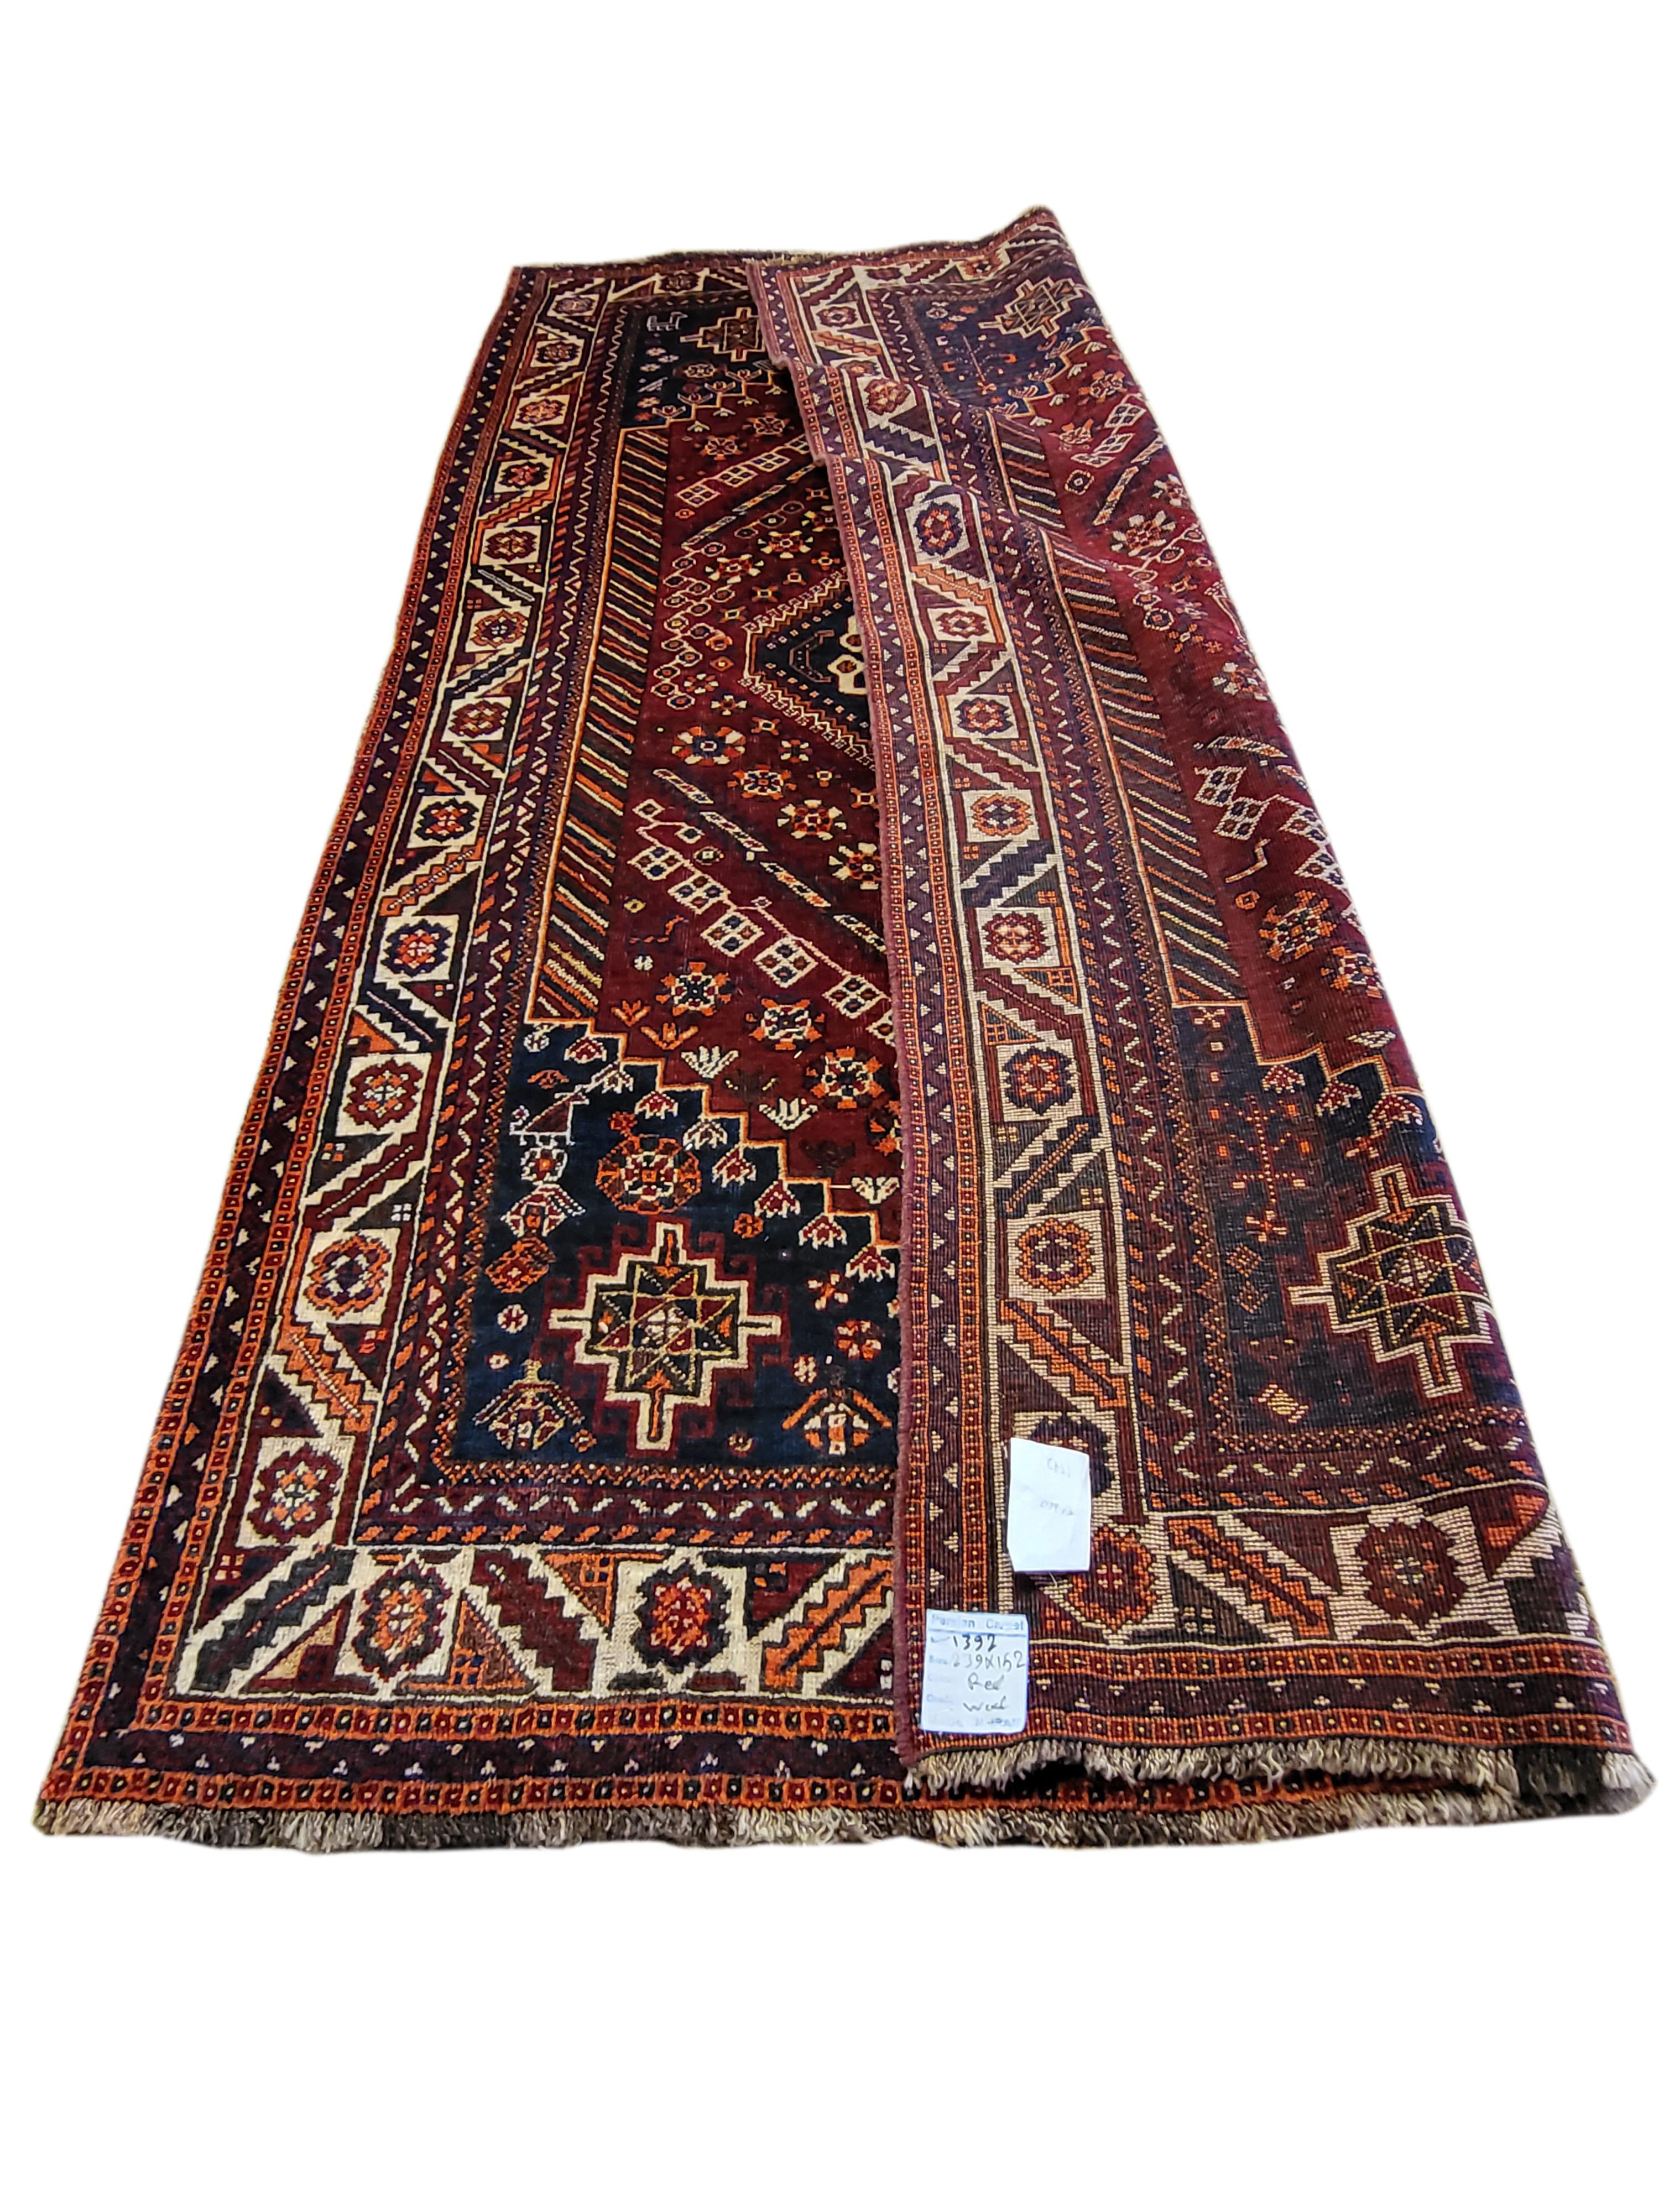 5'x7' Antique Qashqai - Rahimi Persian Rug In Good Condition For Sale In Blacksburg, VA